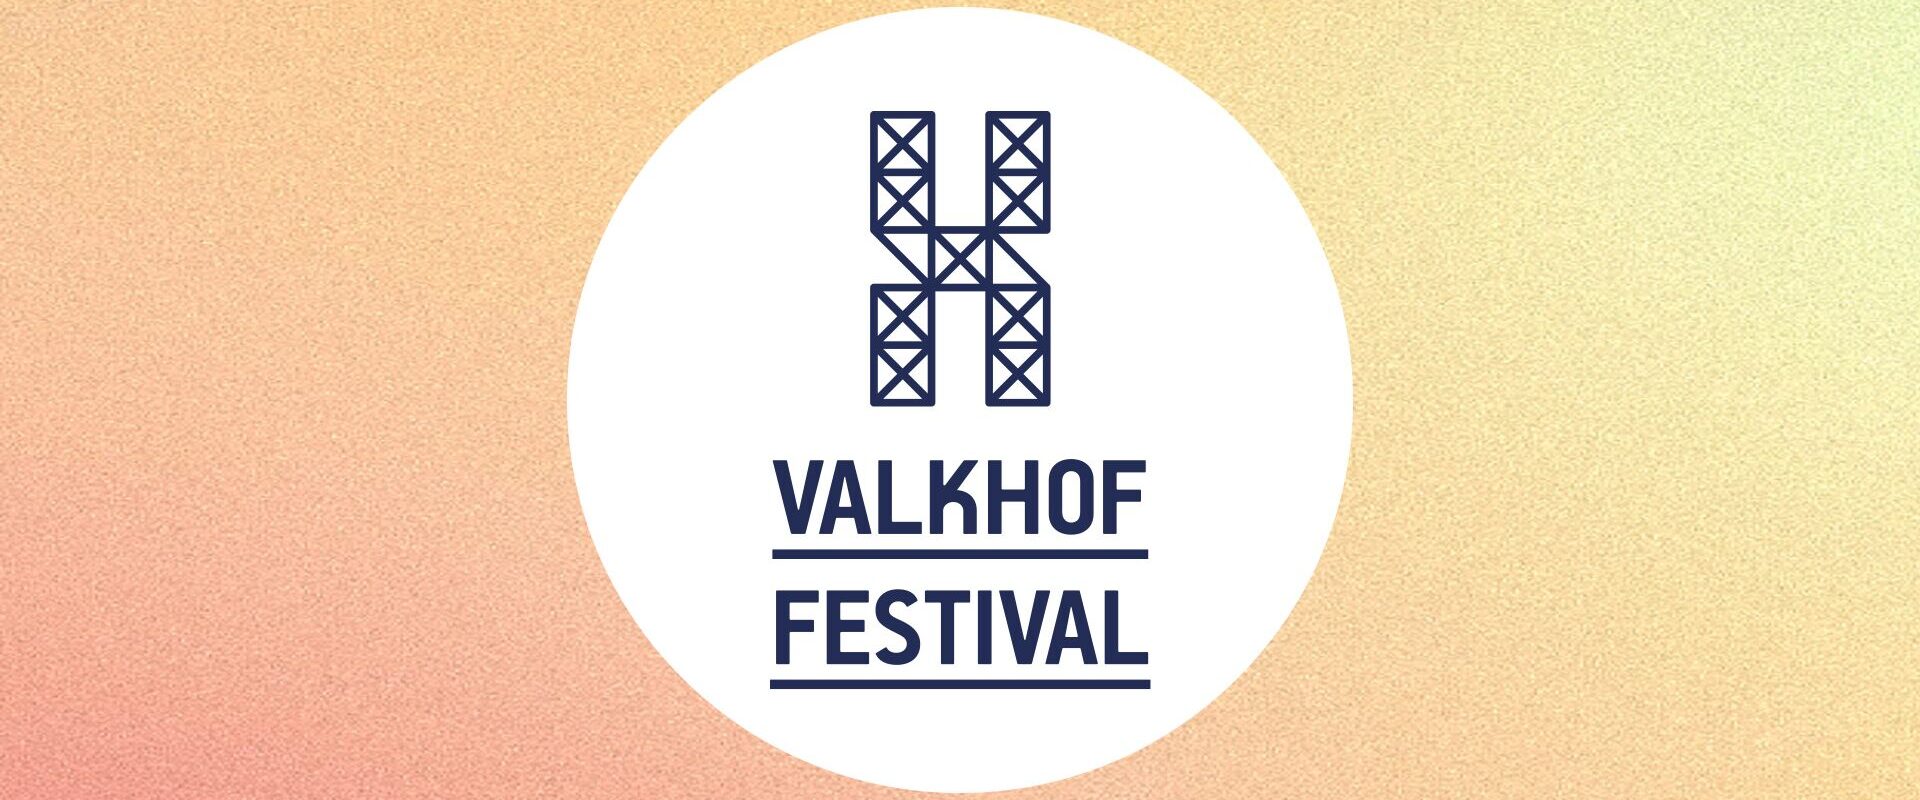 X Valkhof Festival | Kika Sprangers & Pynarello 2